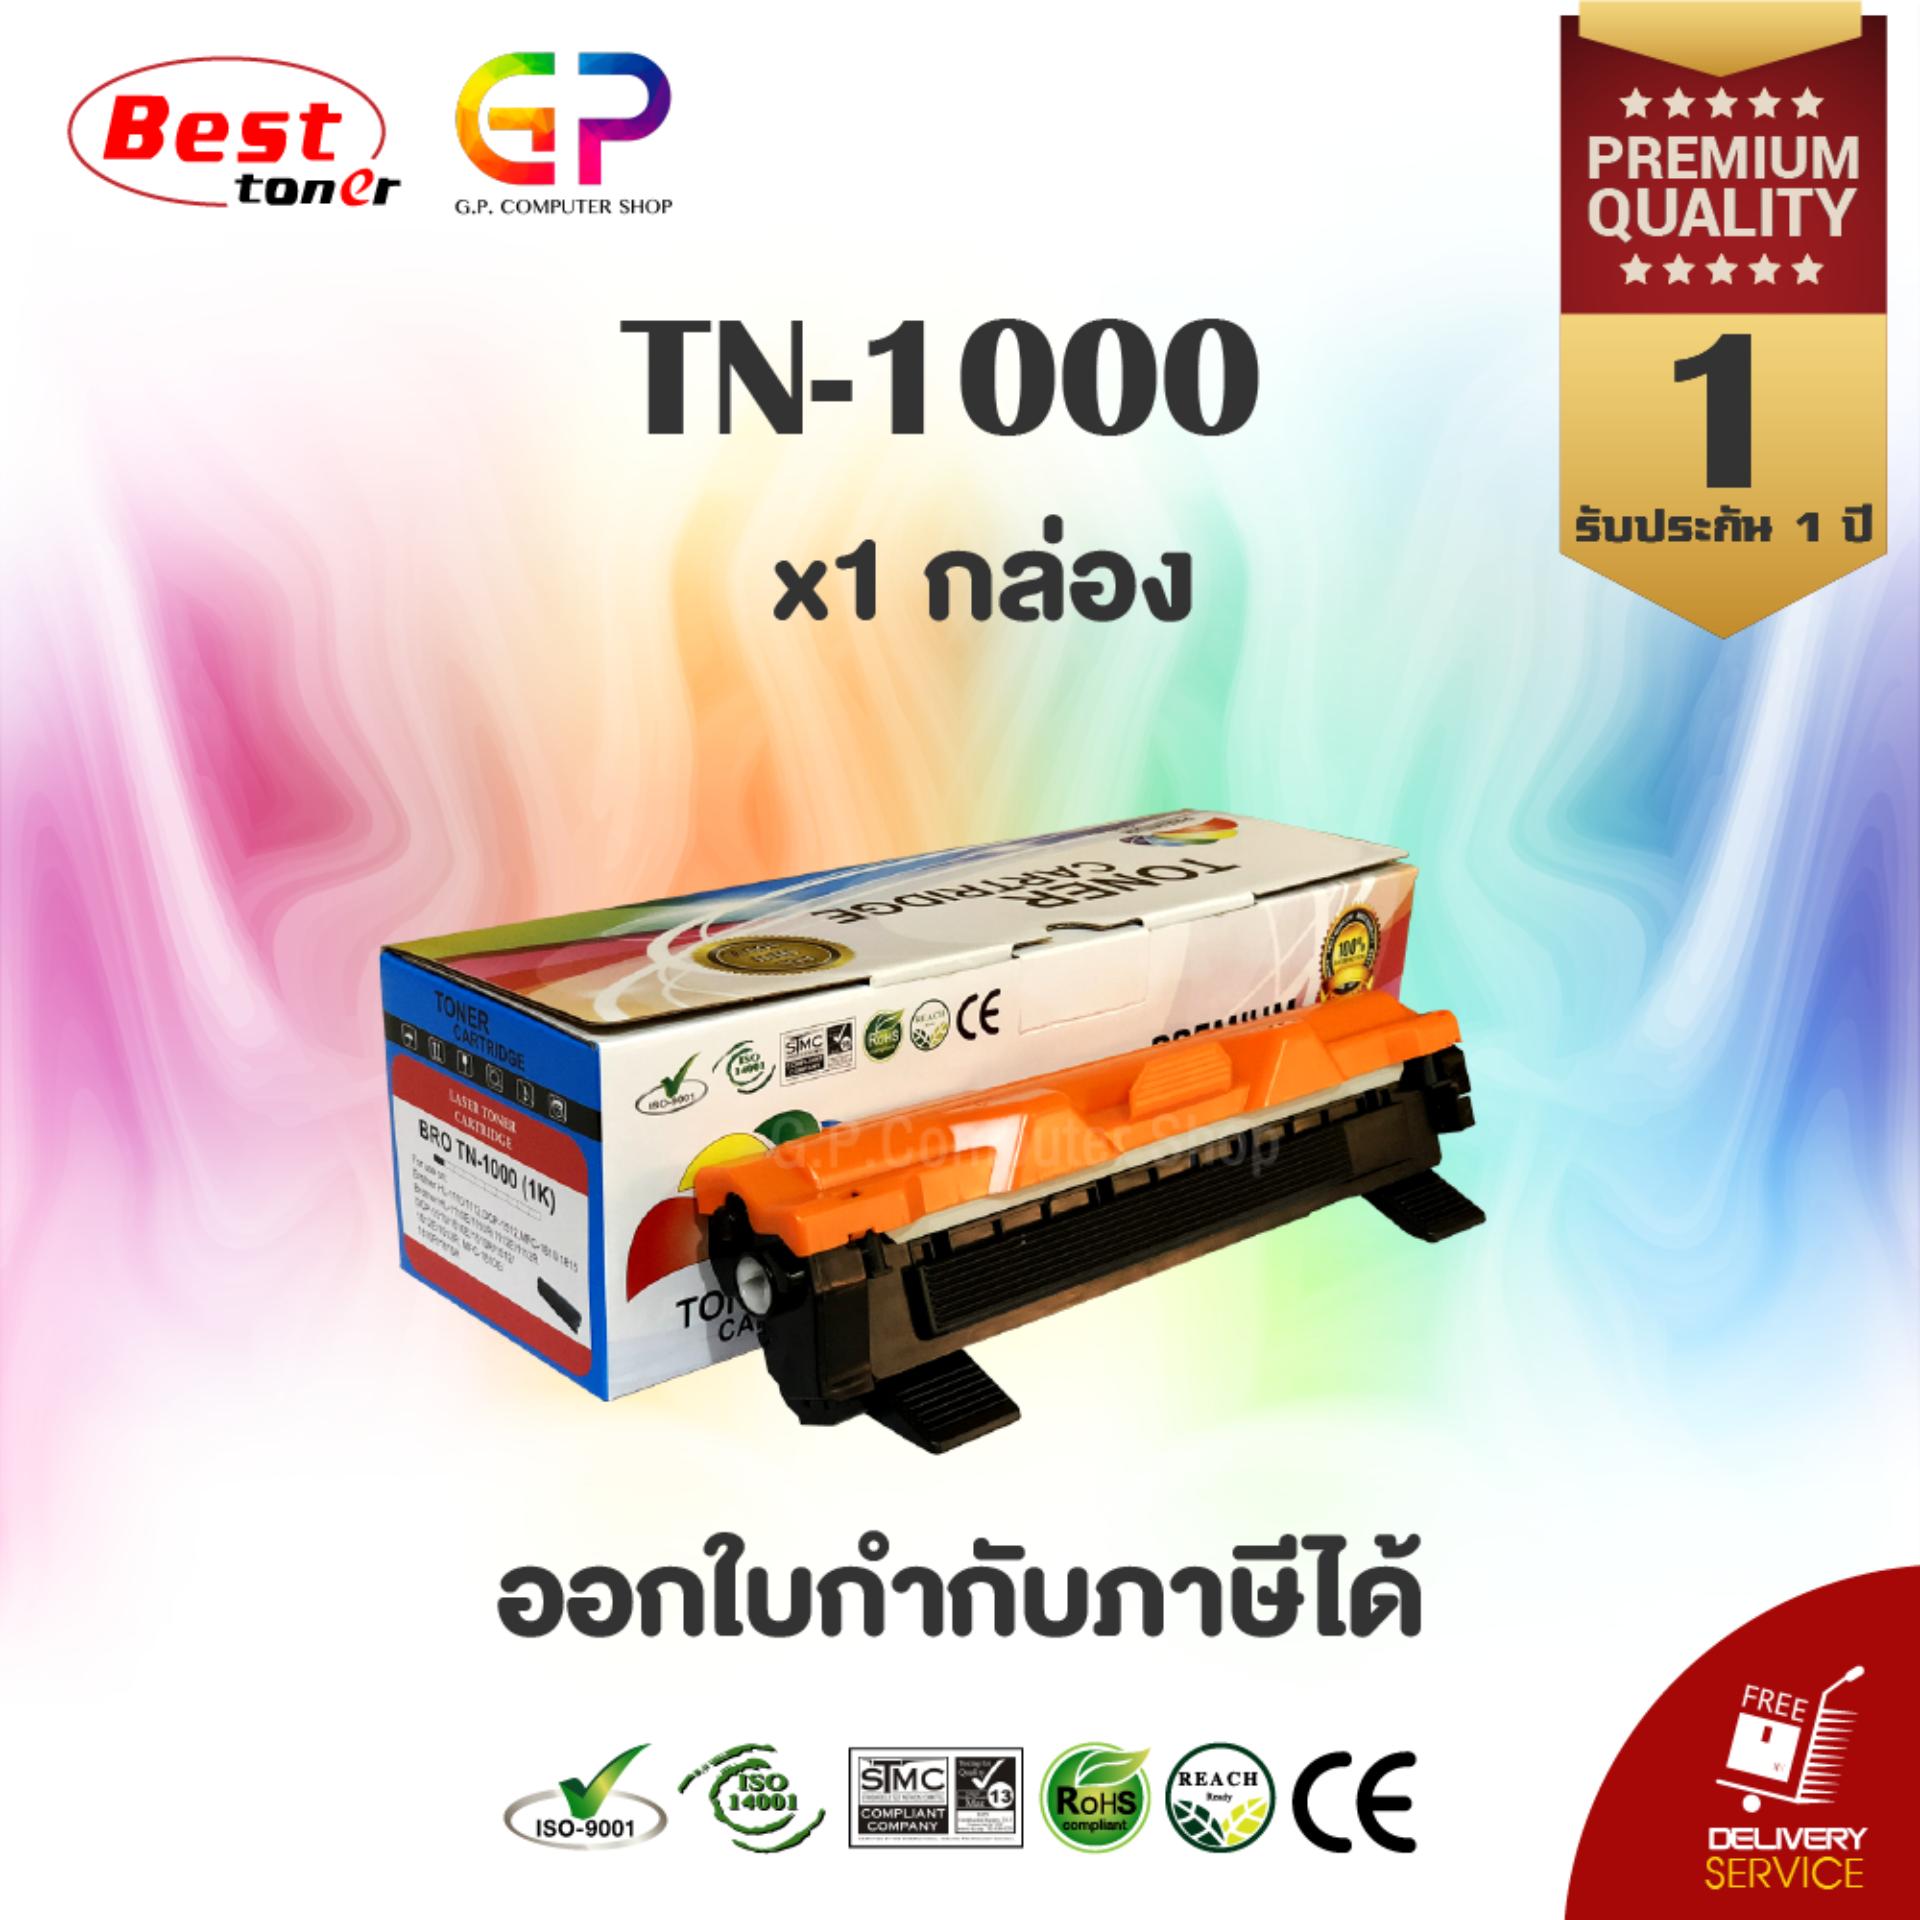 Color Box / TN-1000 / TN1000 / หมึกพิมพ์เลเซอร์เทียบเท่า / HL-1110 / HL-1210w / DCP-1510 / DCP-1610w / MFC-1810 / MFC-1815 / MFC-1910w / สีดำ / 1,000 แผ่น / 1 กล่อง